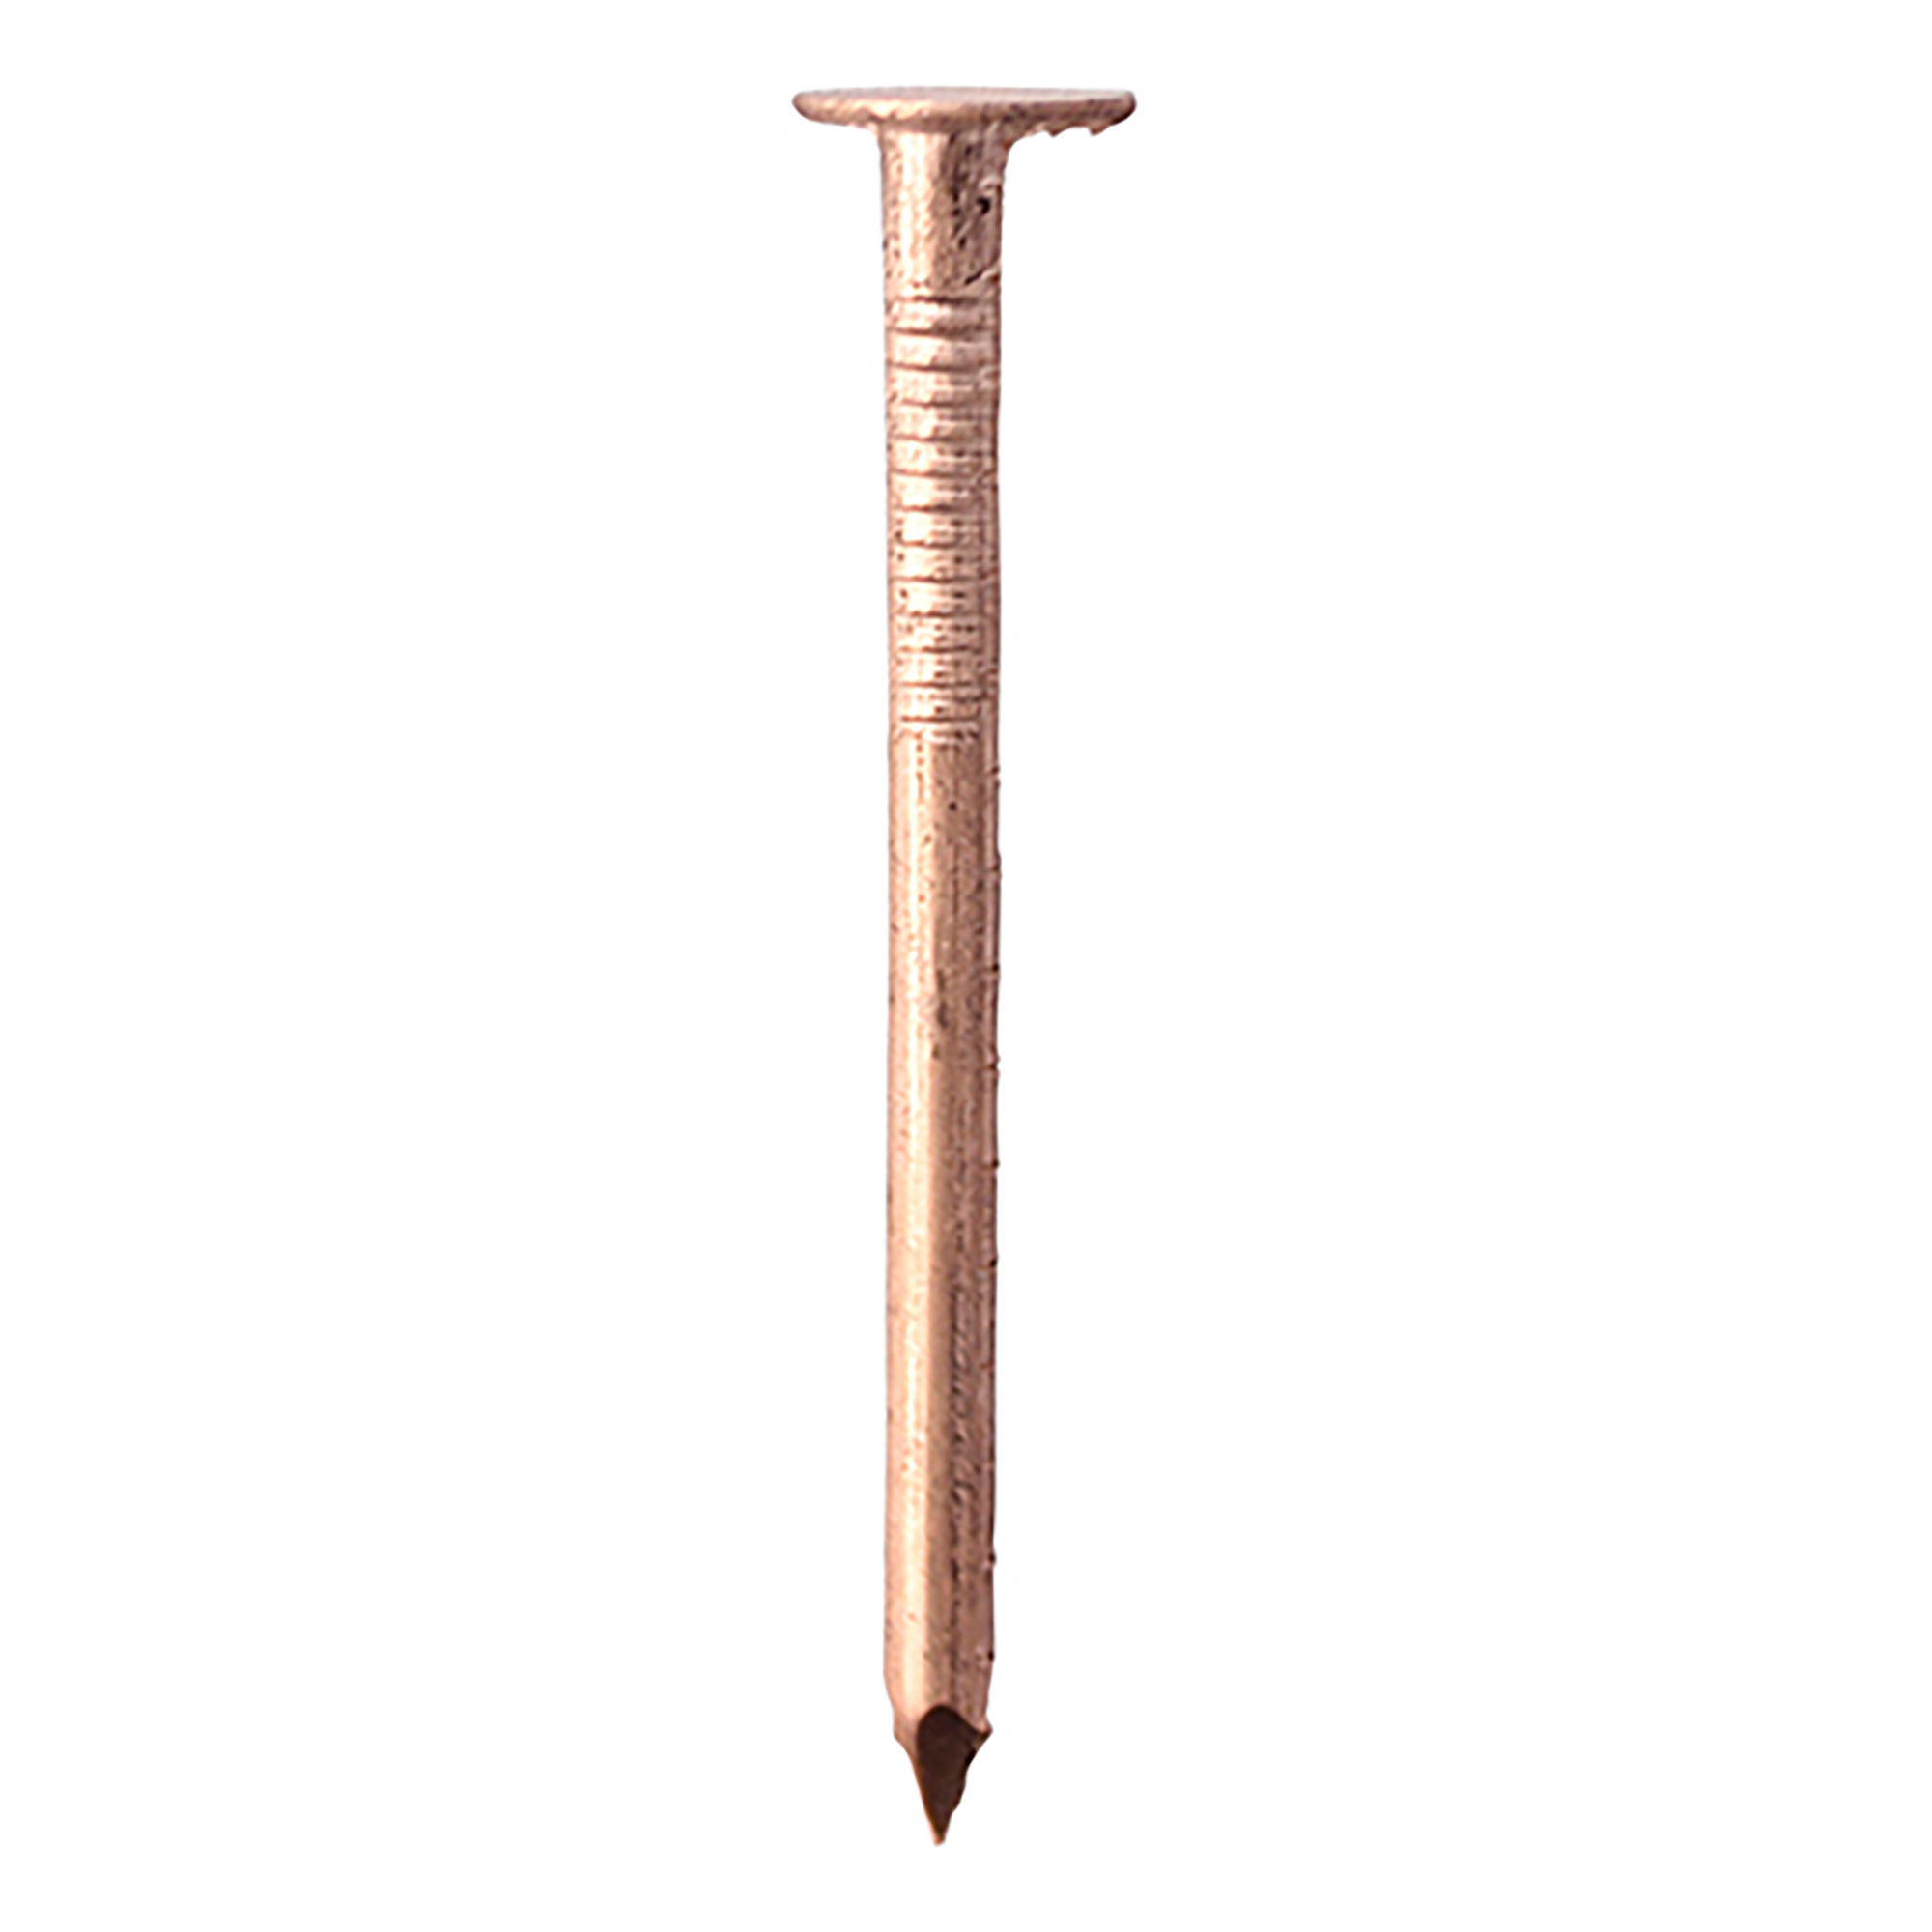 Timco Copper Clout Nails 1kg 3.35mm x 38mm - COP338B